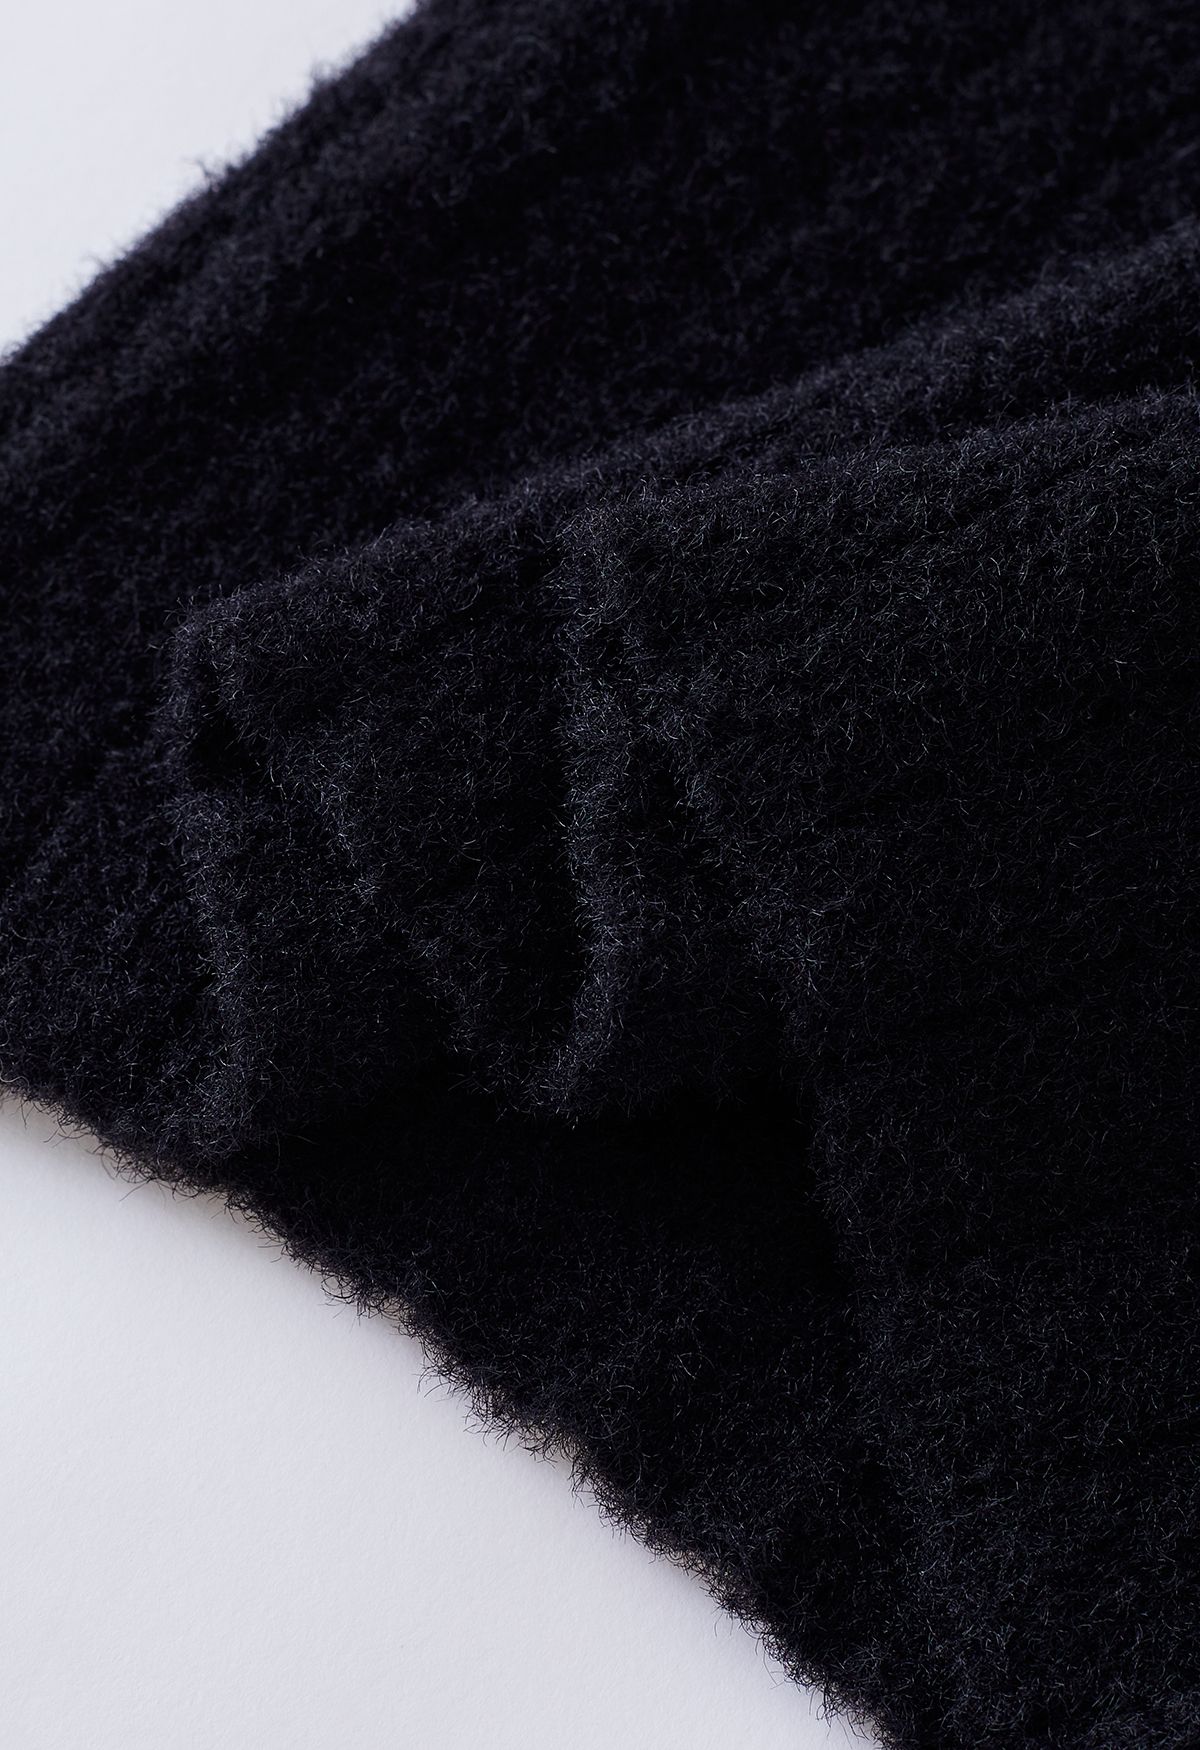 Cold-Shoulder Twist Cutout Crop Knit Top in Black